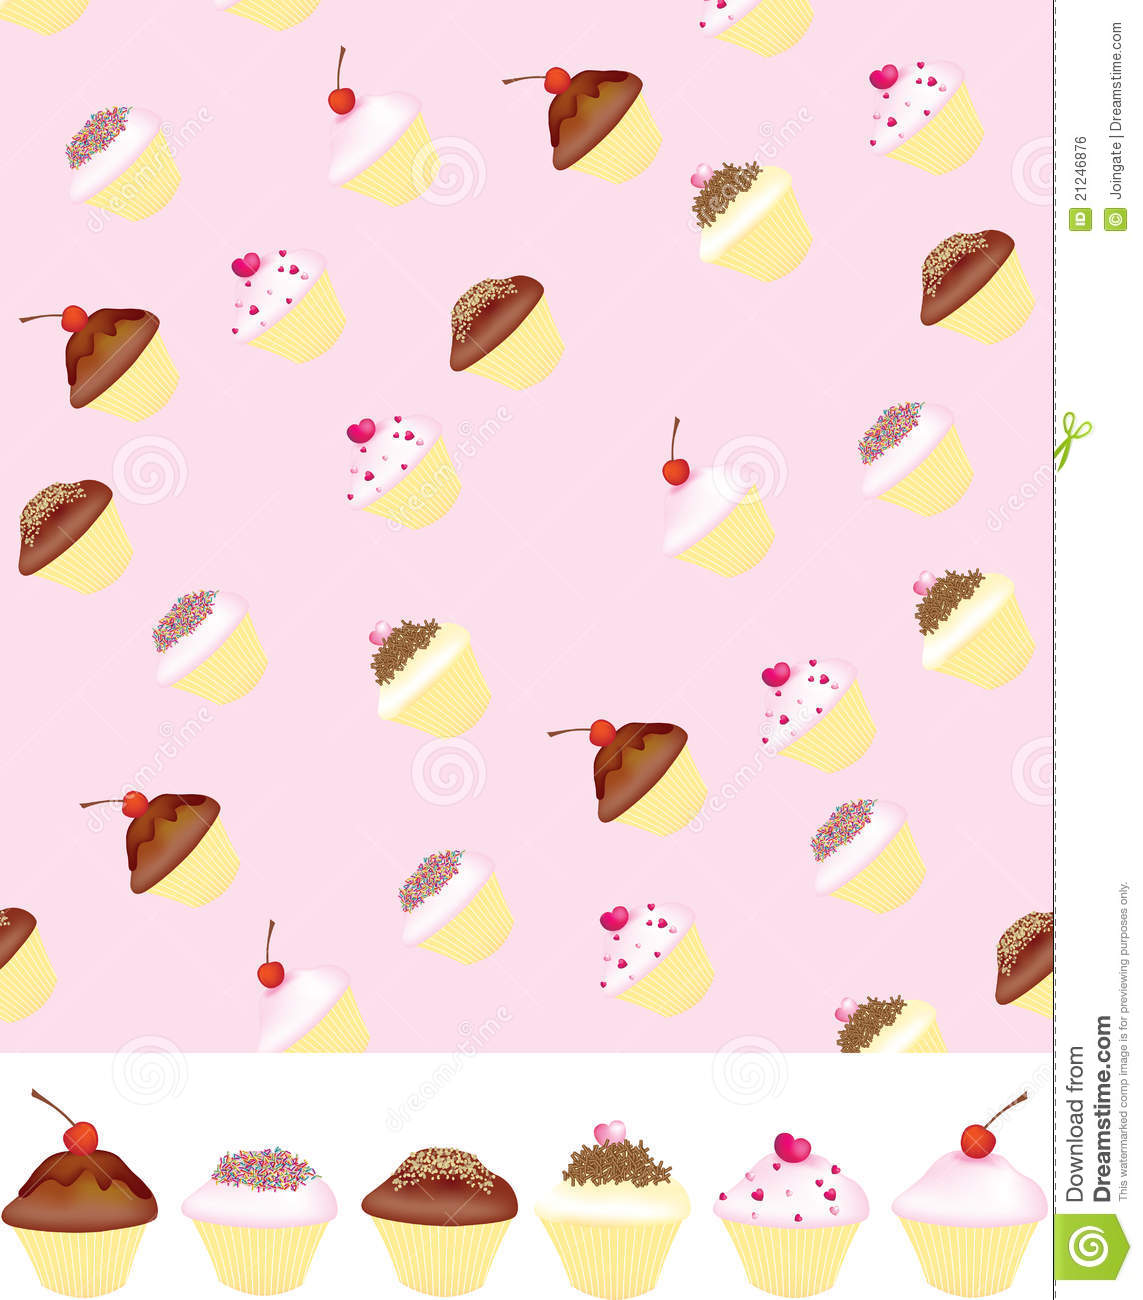 Cupcake Wallpaper Background Jpg